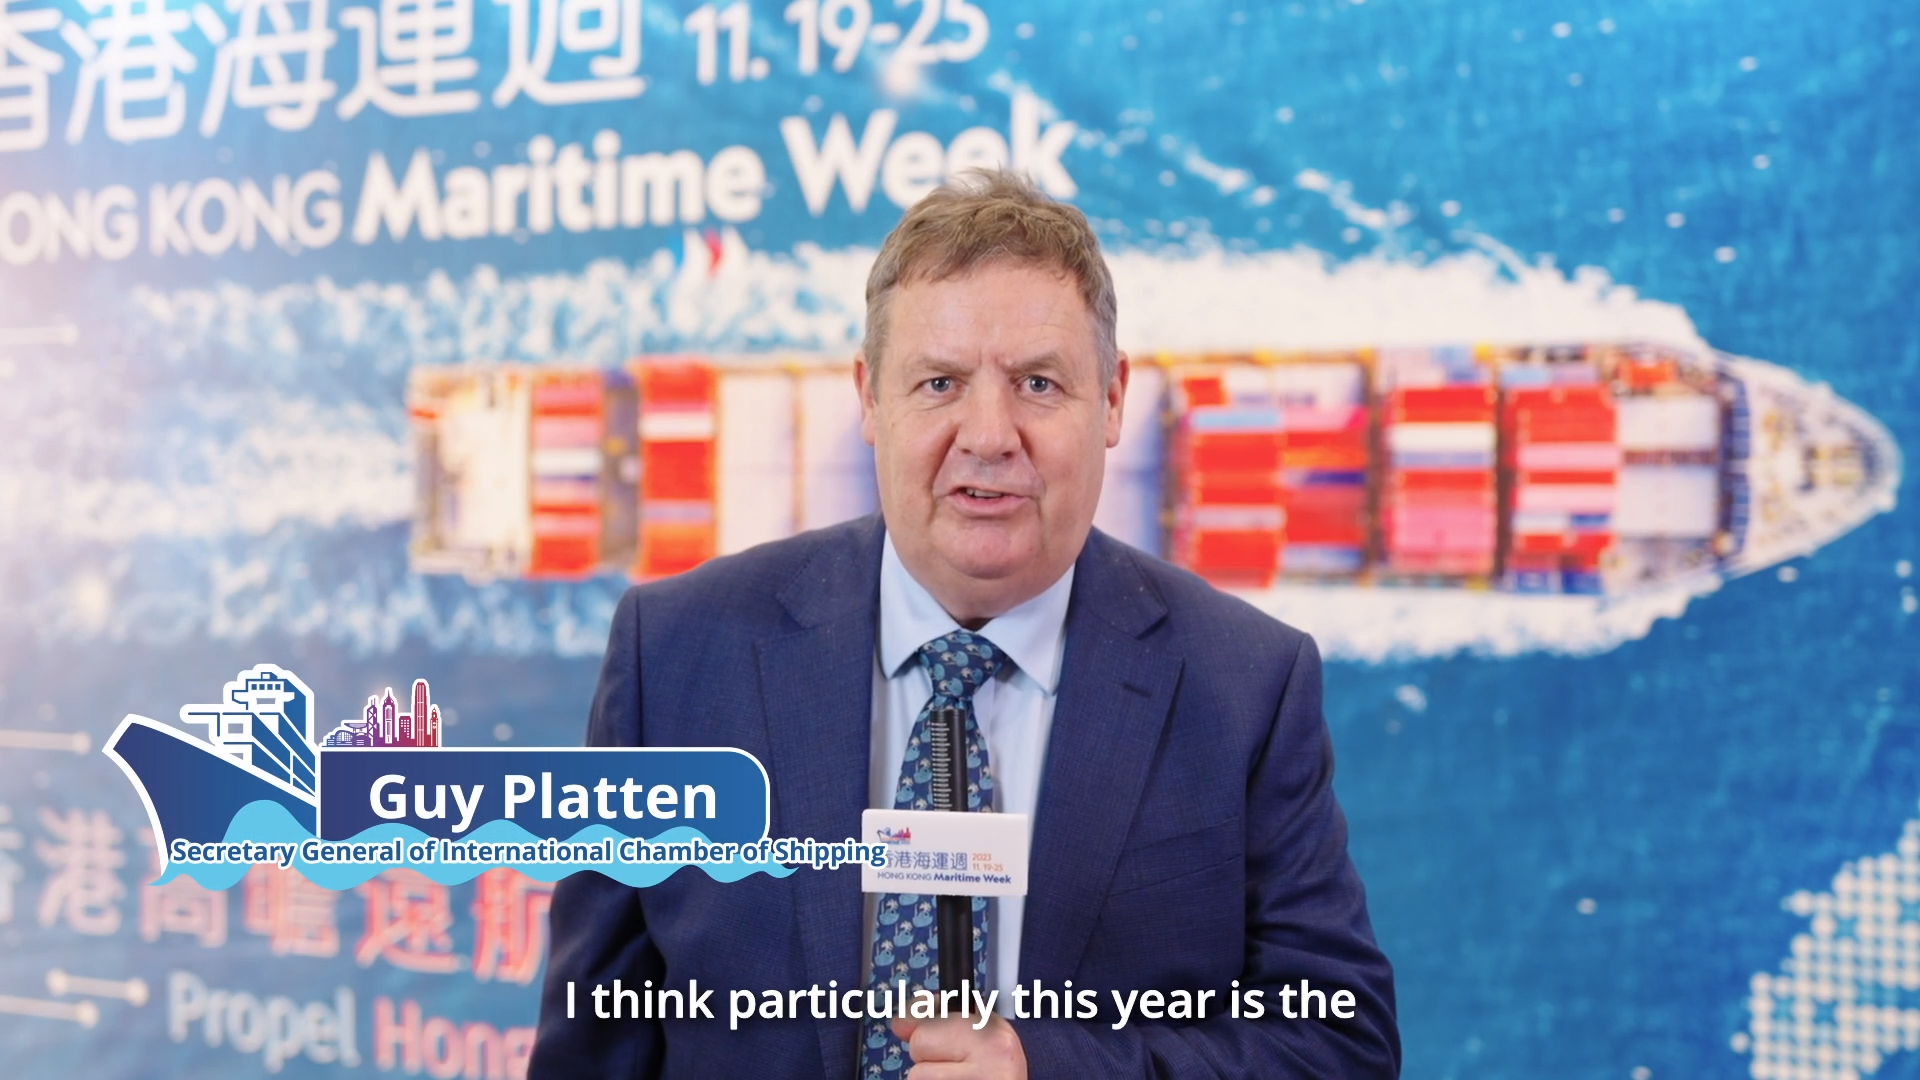 Hong Kong Maritime Week 2023 - Highlights from Mr Guy Platten, Secretary General of International Chamber of Shipping